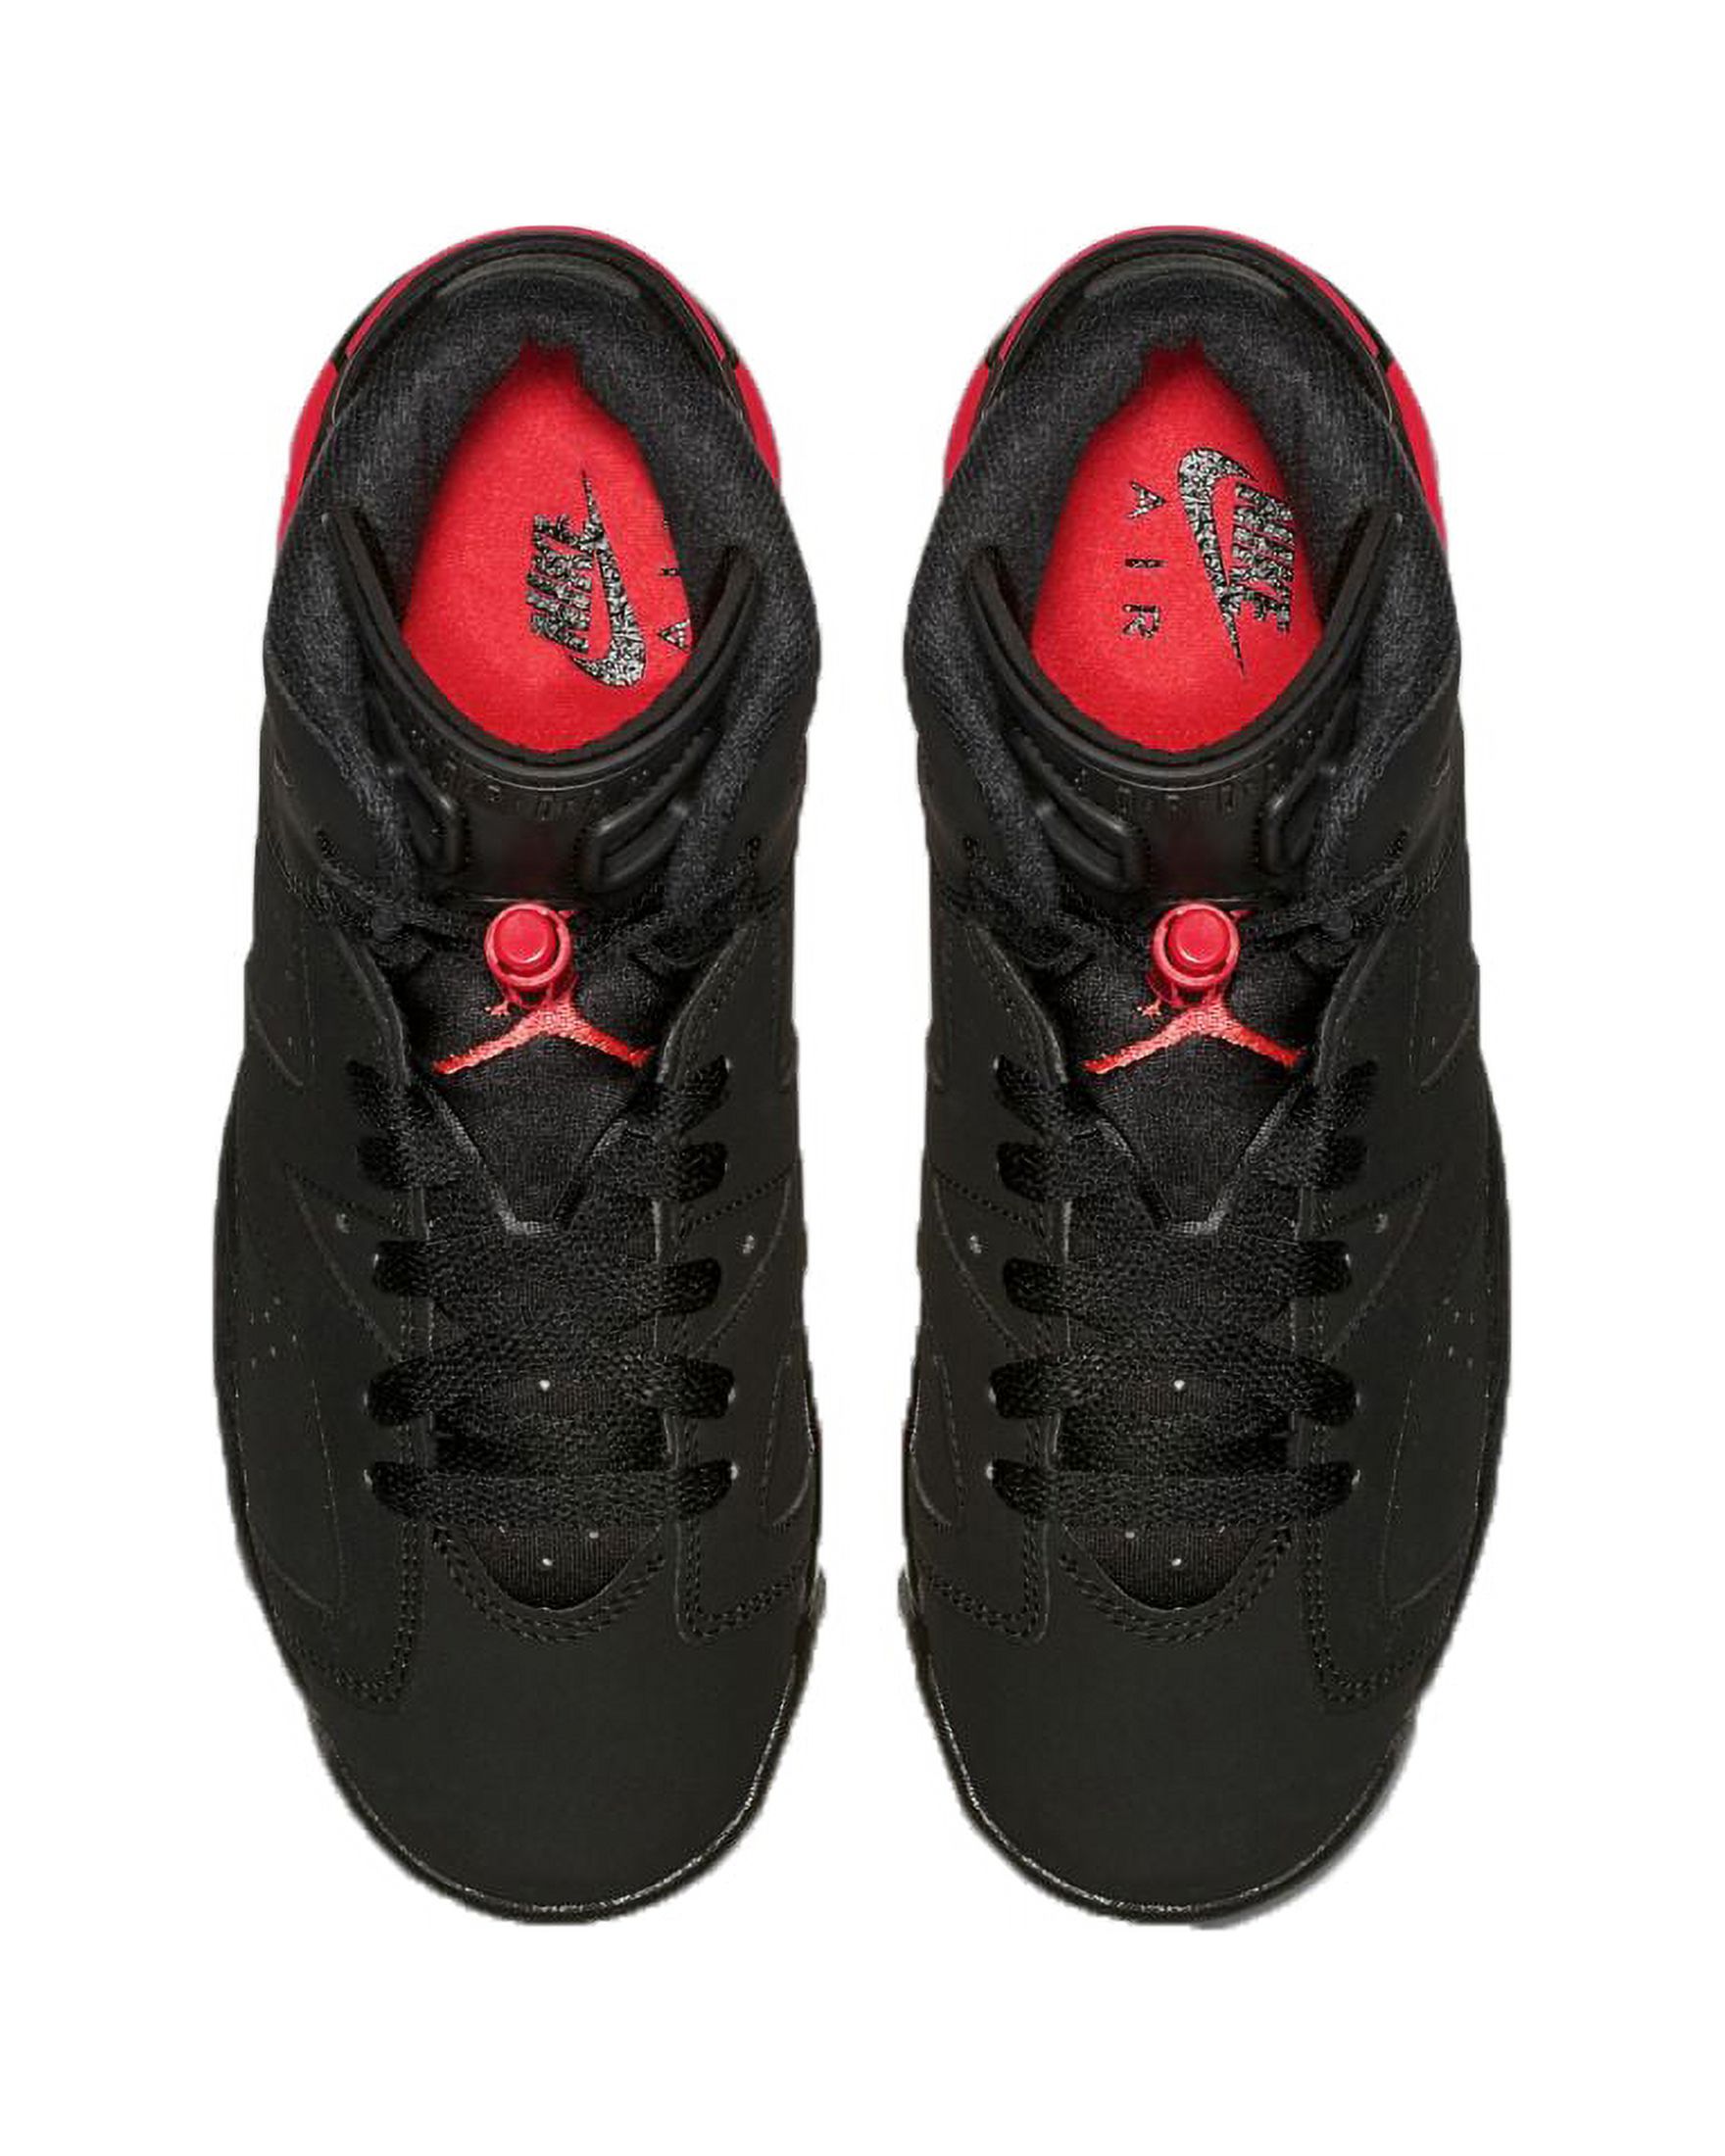 Nike Kids GS Air Jordan 6 Retro Basketball Shoe (5.5) - image 3 of 5